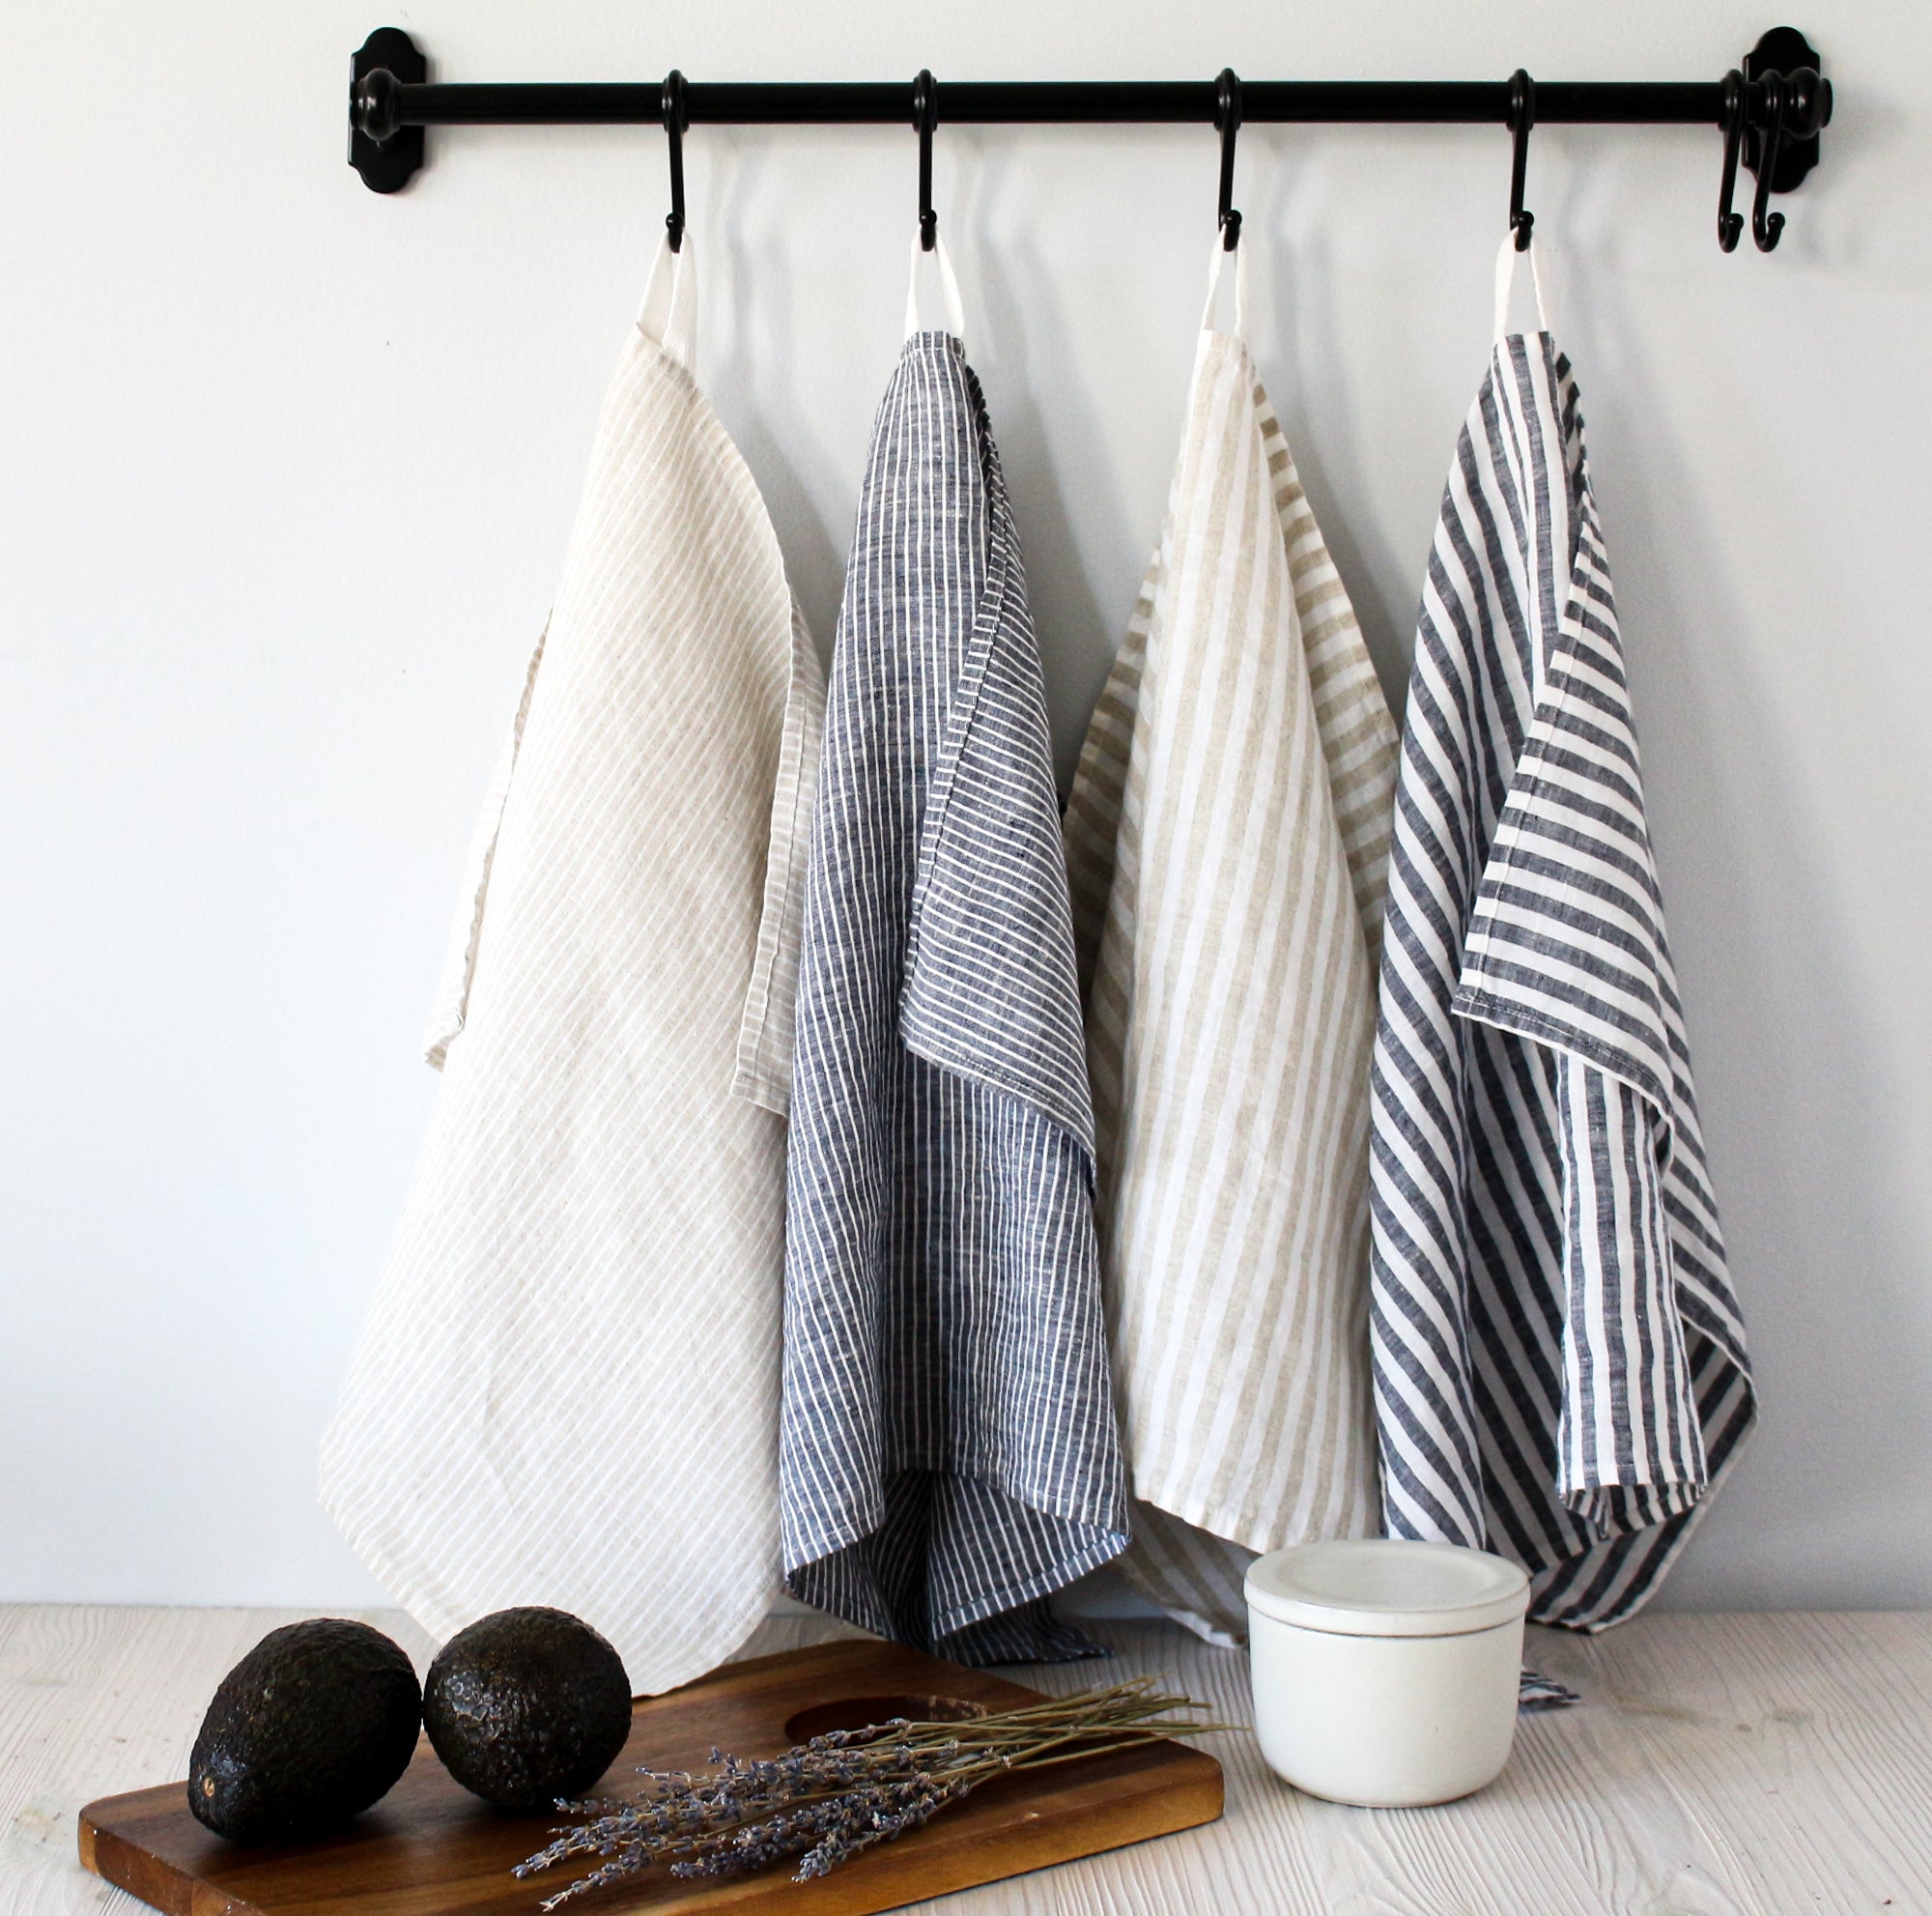 Set of 2 Natural Black Striped Linen Tea Towels Provence - LinenMe